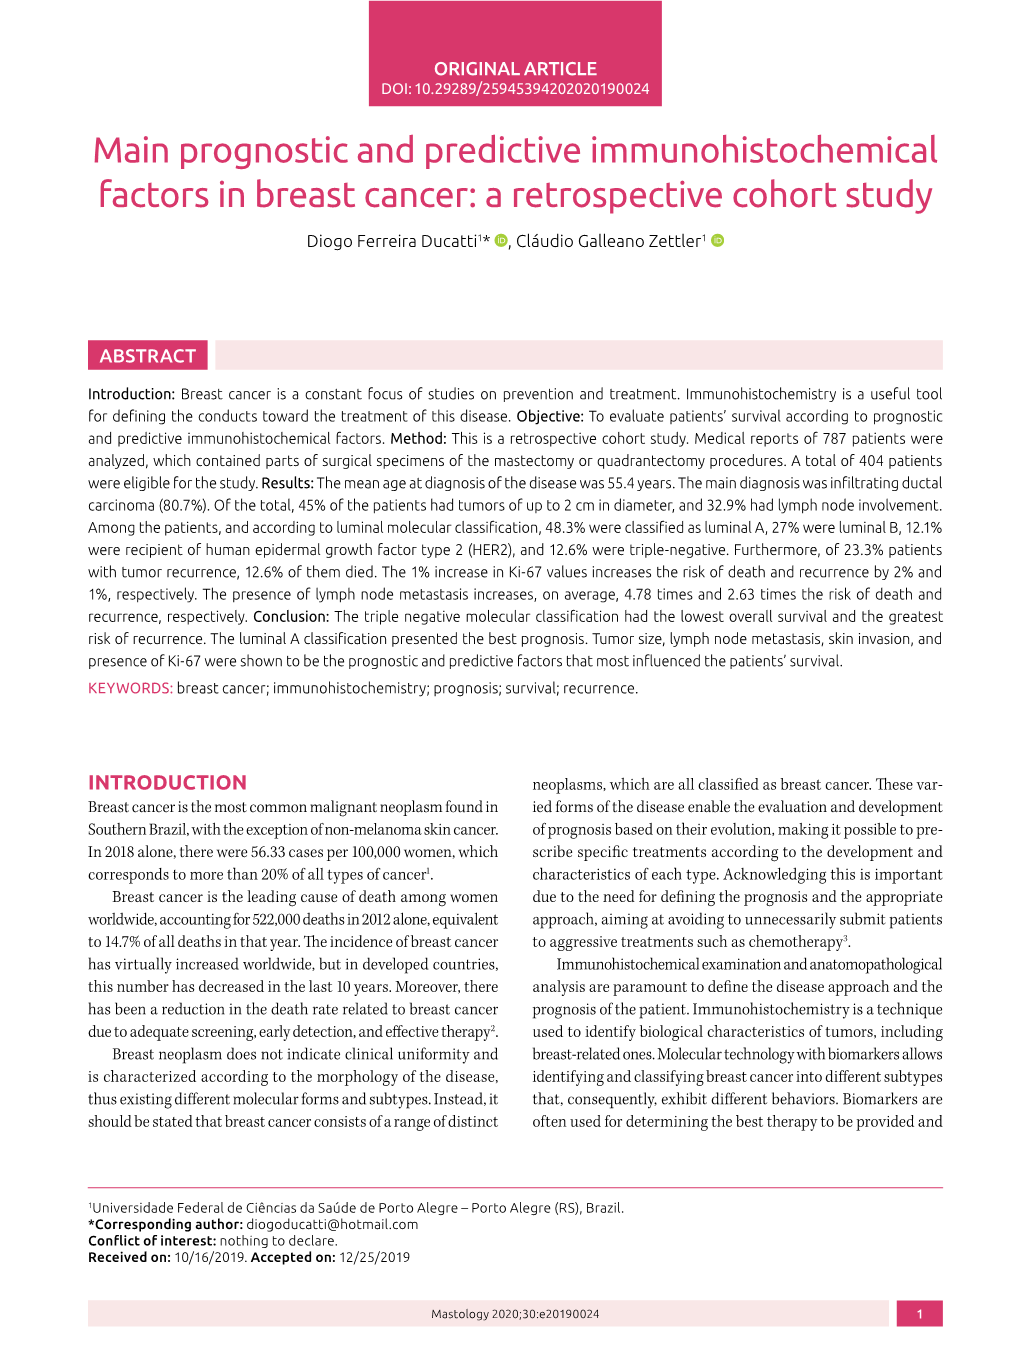 Prognostic and Predictive Immunohistochemical Factors in Breast Cancer: a Retrospective Cohort Study